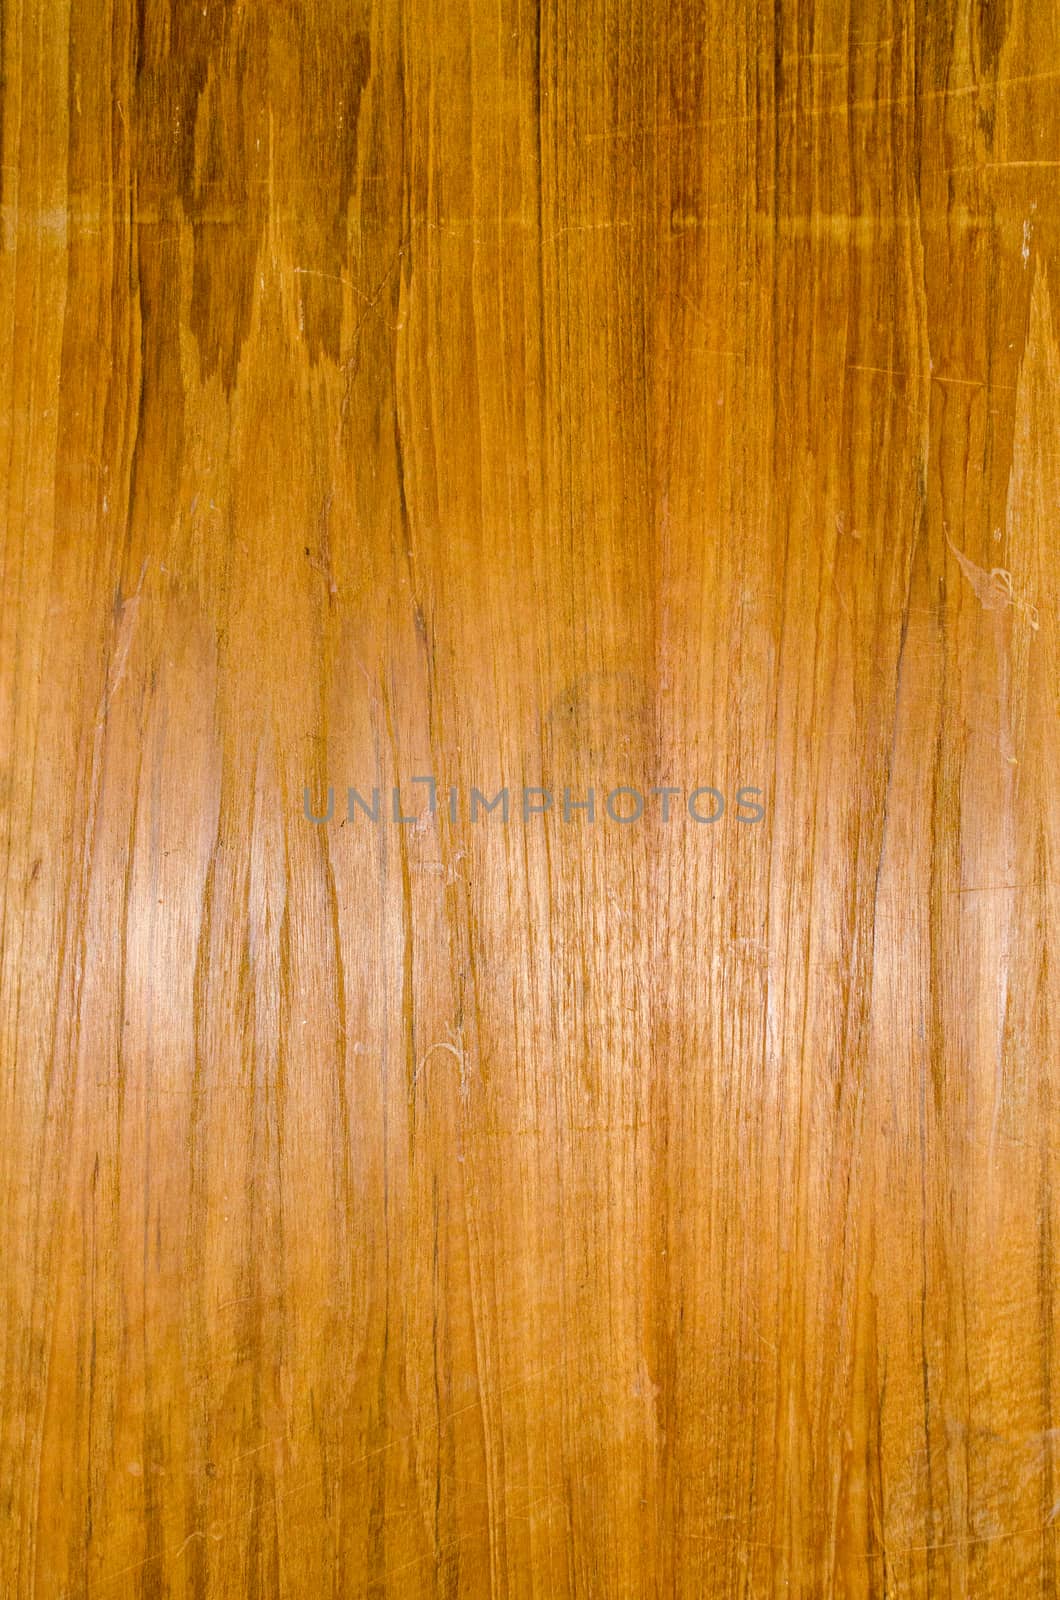 High resolution natural woodgrain texture .